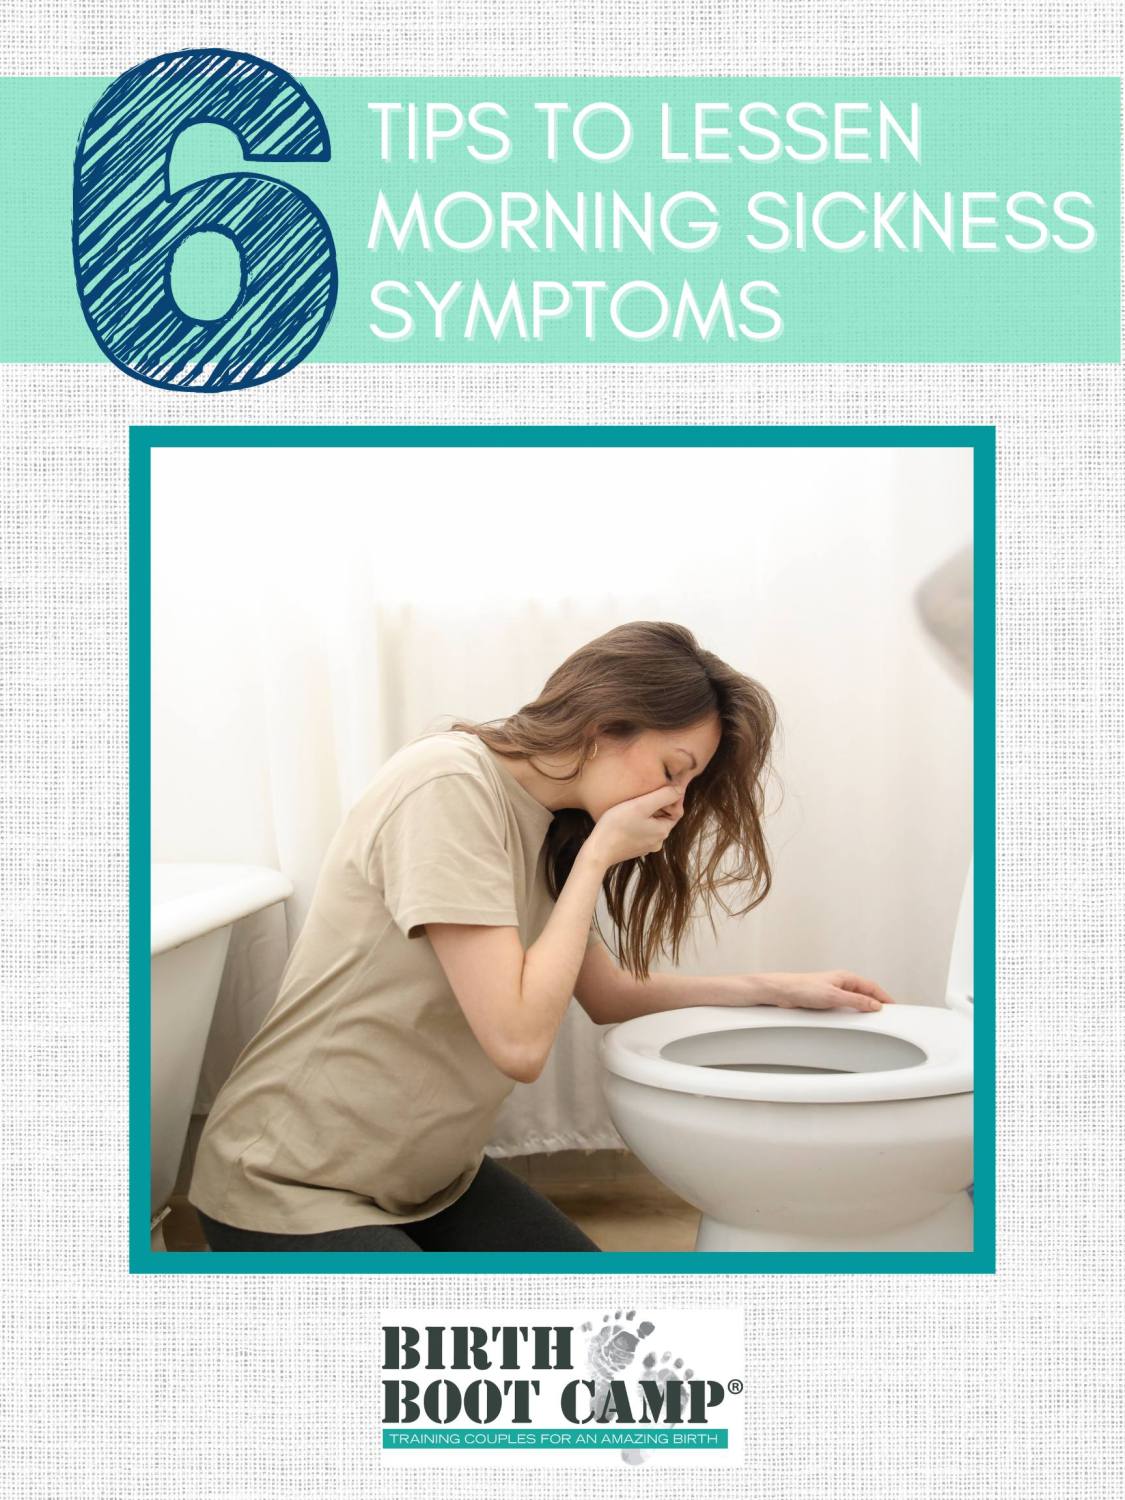 6 Tips to Lessen Morning Sickness Symptoms